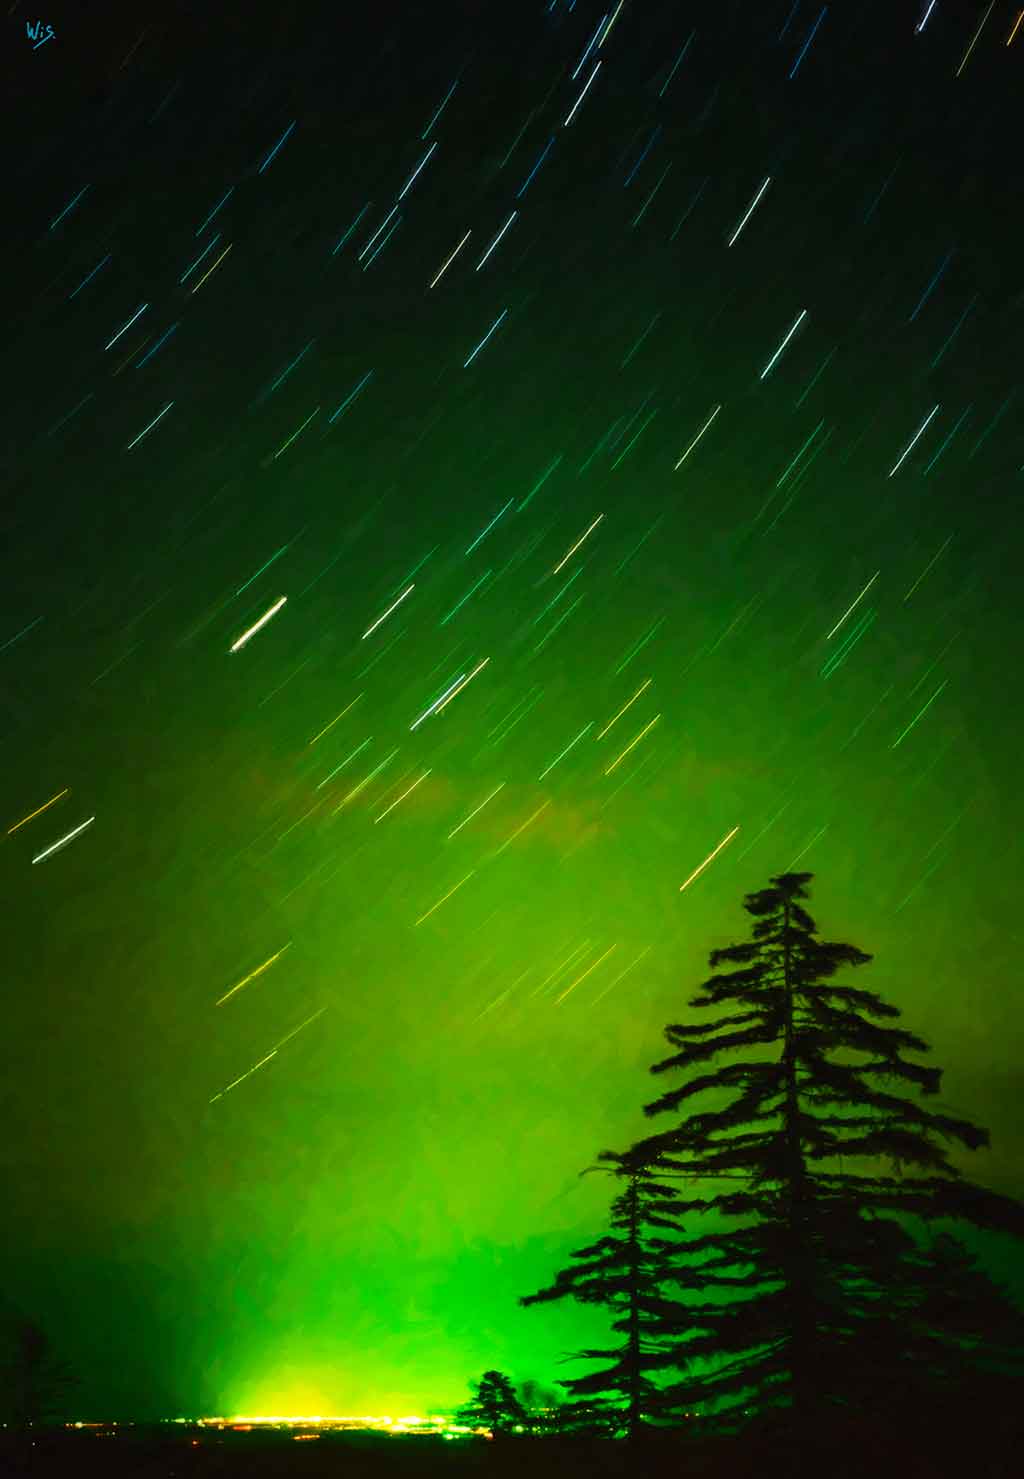 Green night with moving stars, city lights on horizon, black trees; painting by Wiesław Sadurski